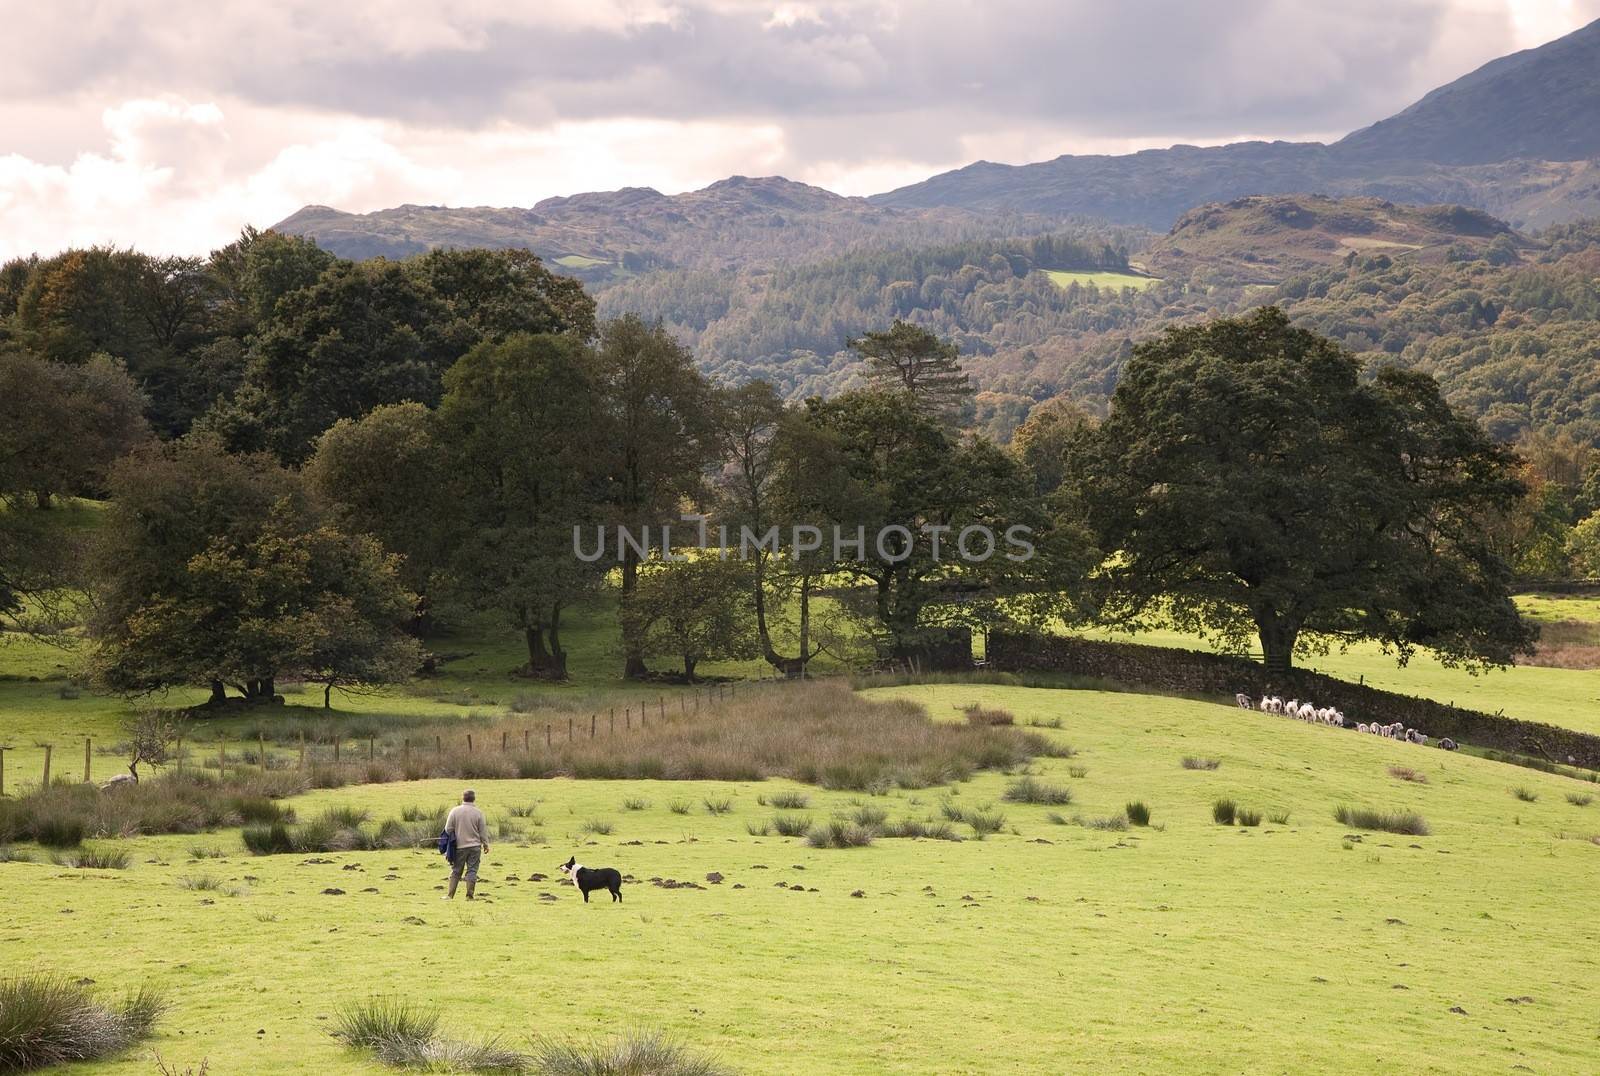 Loughrigg, Cumbria, UK ��� September 18, 2011: Shepherd with his sheep dog rounding up the flock.